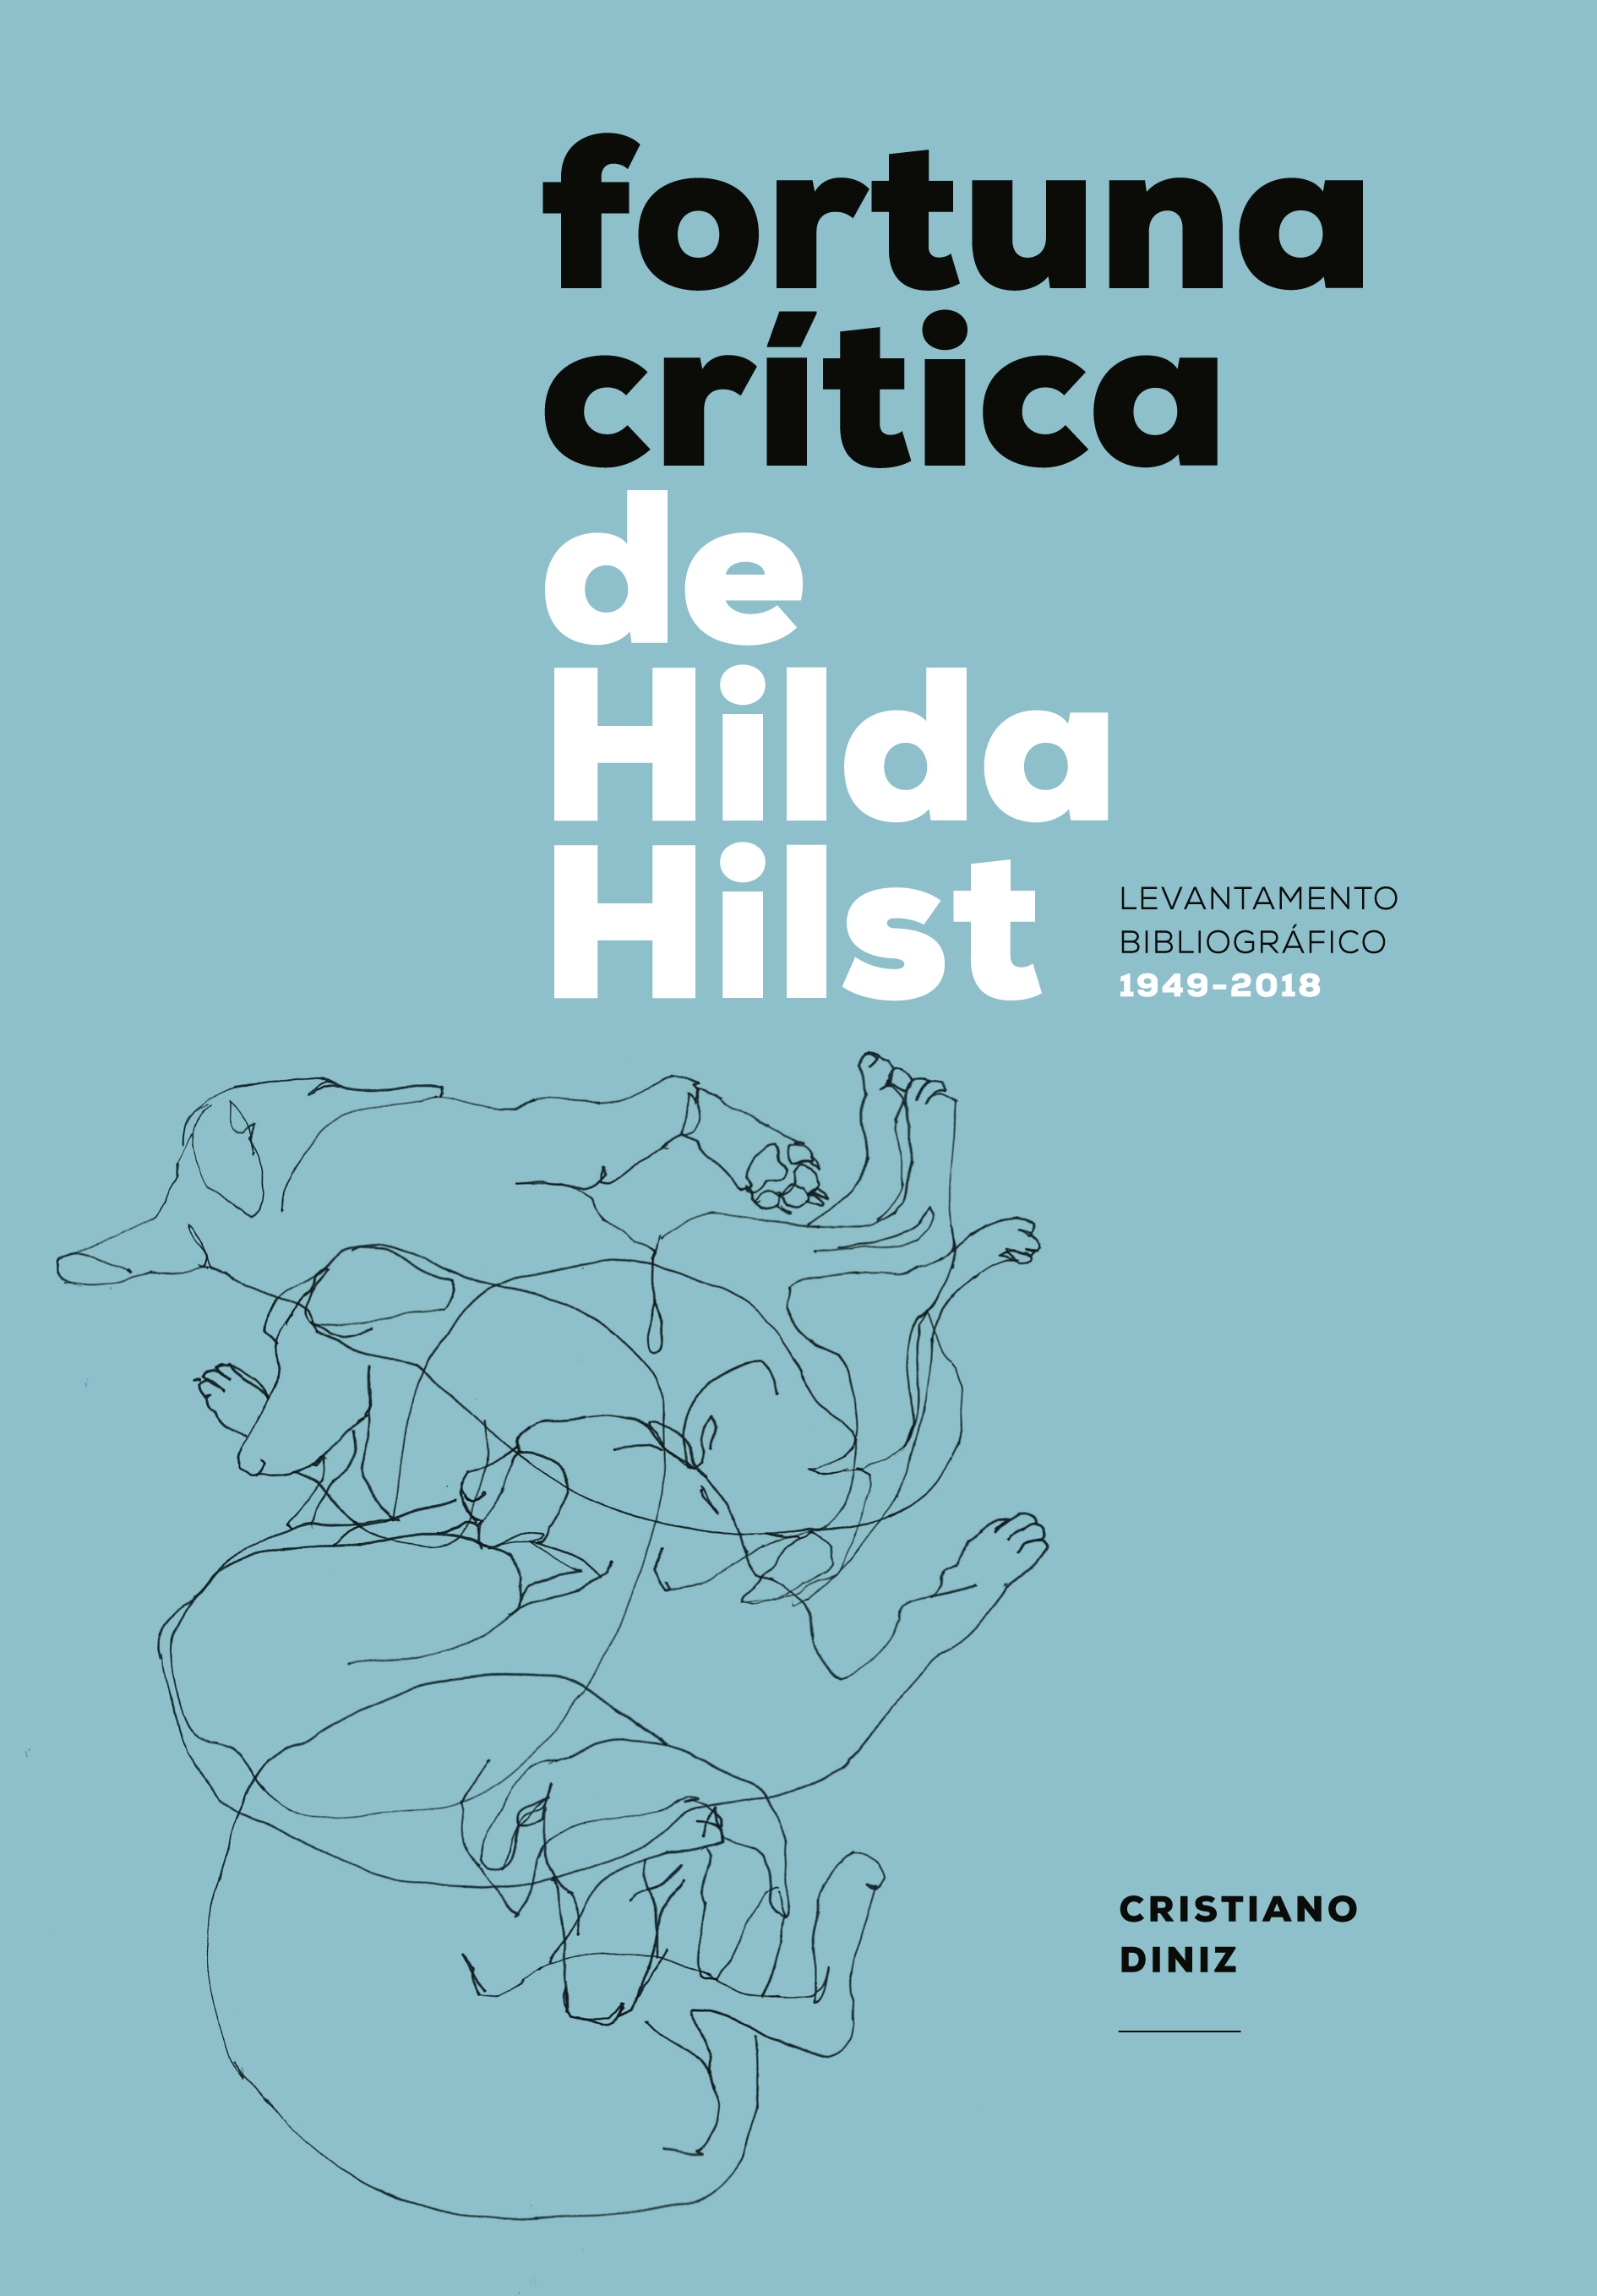 Fortuna crítica de Hilda Hilst